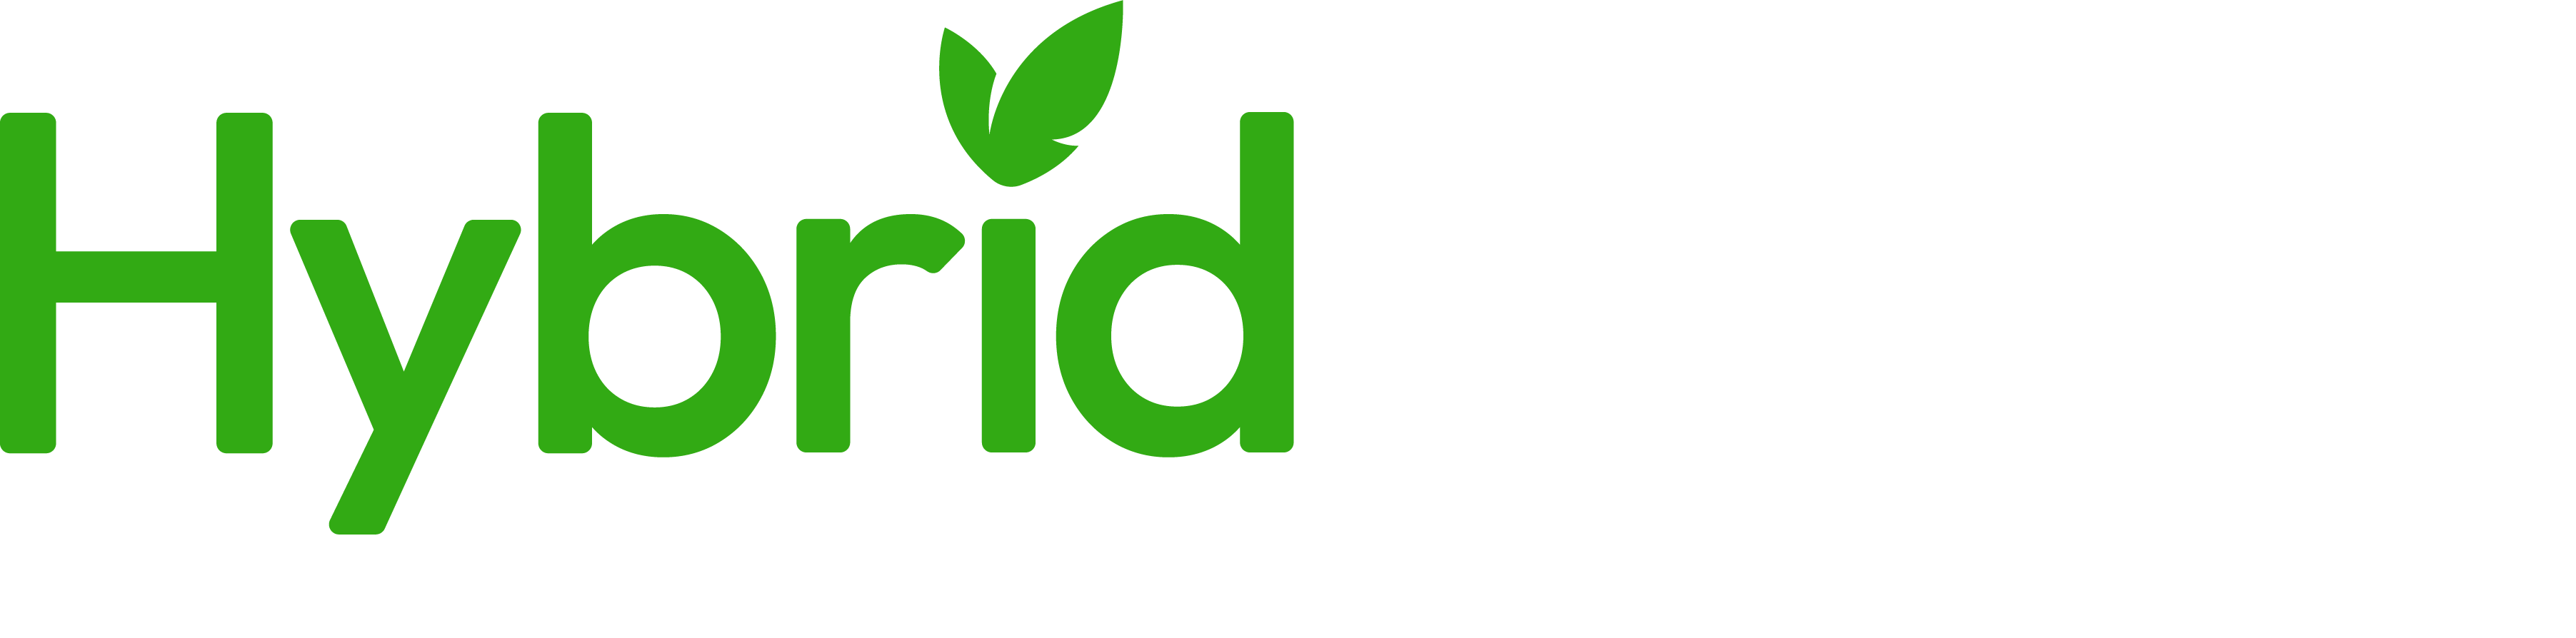 Hybrid Van Services